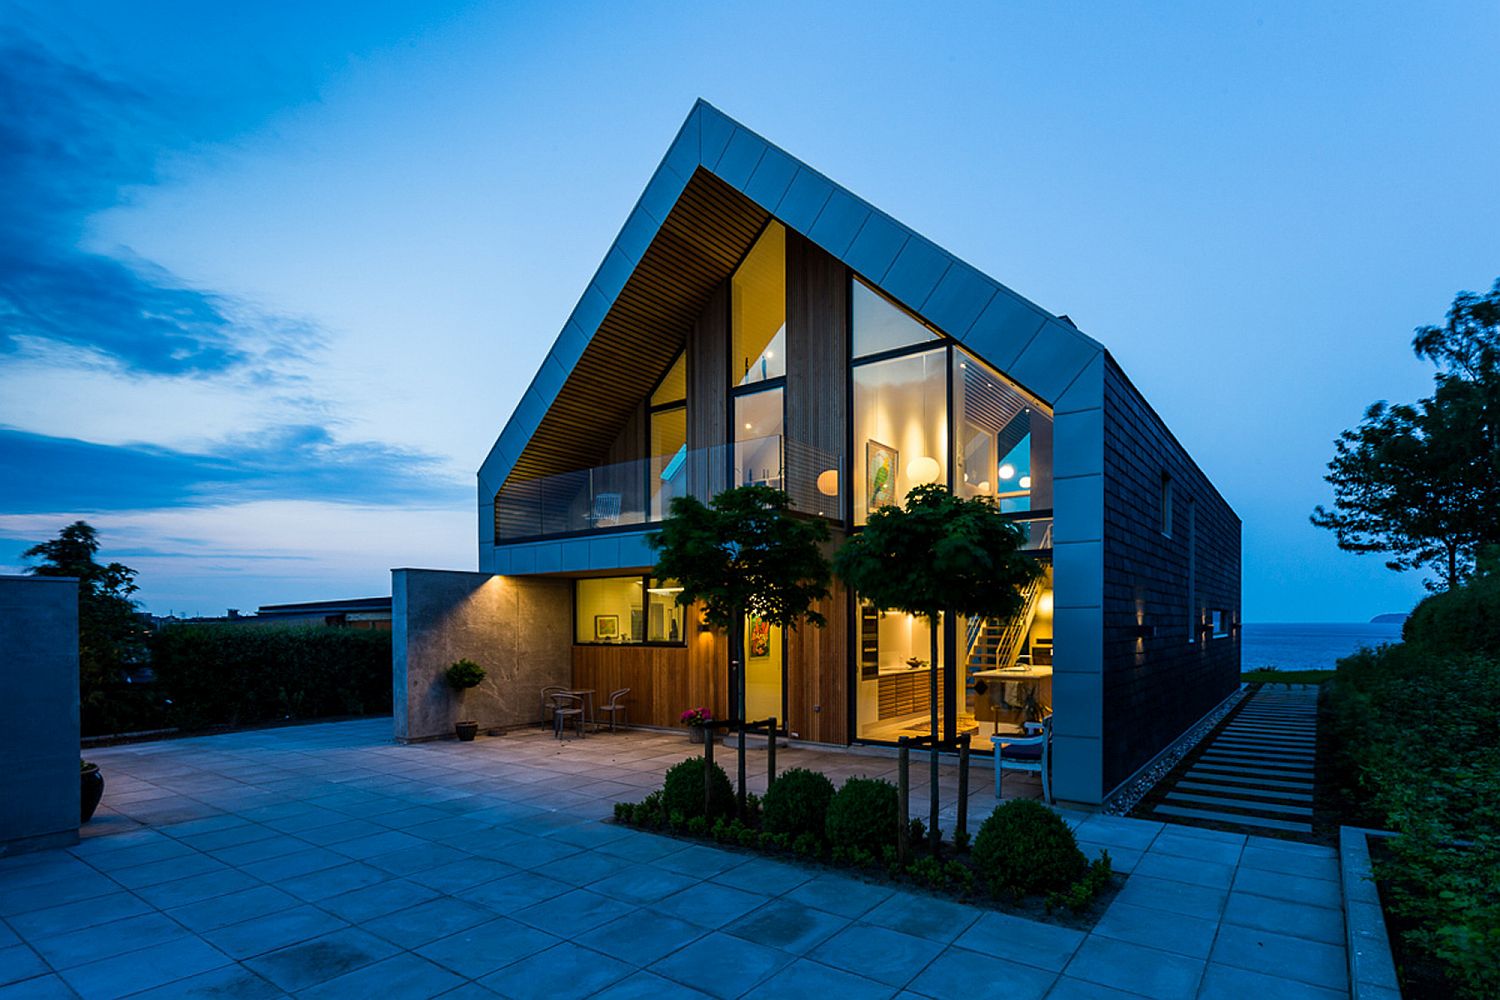 Exquisite-contemporary-Villa-P-in-Denmark-with-ocean-views